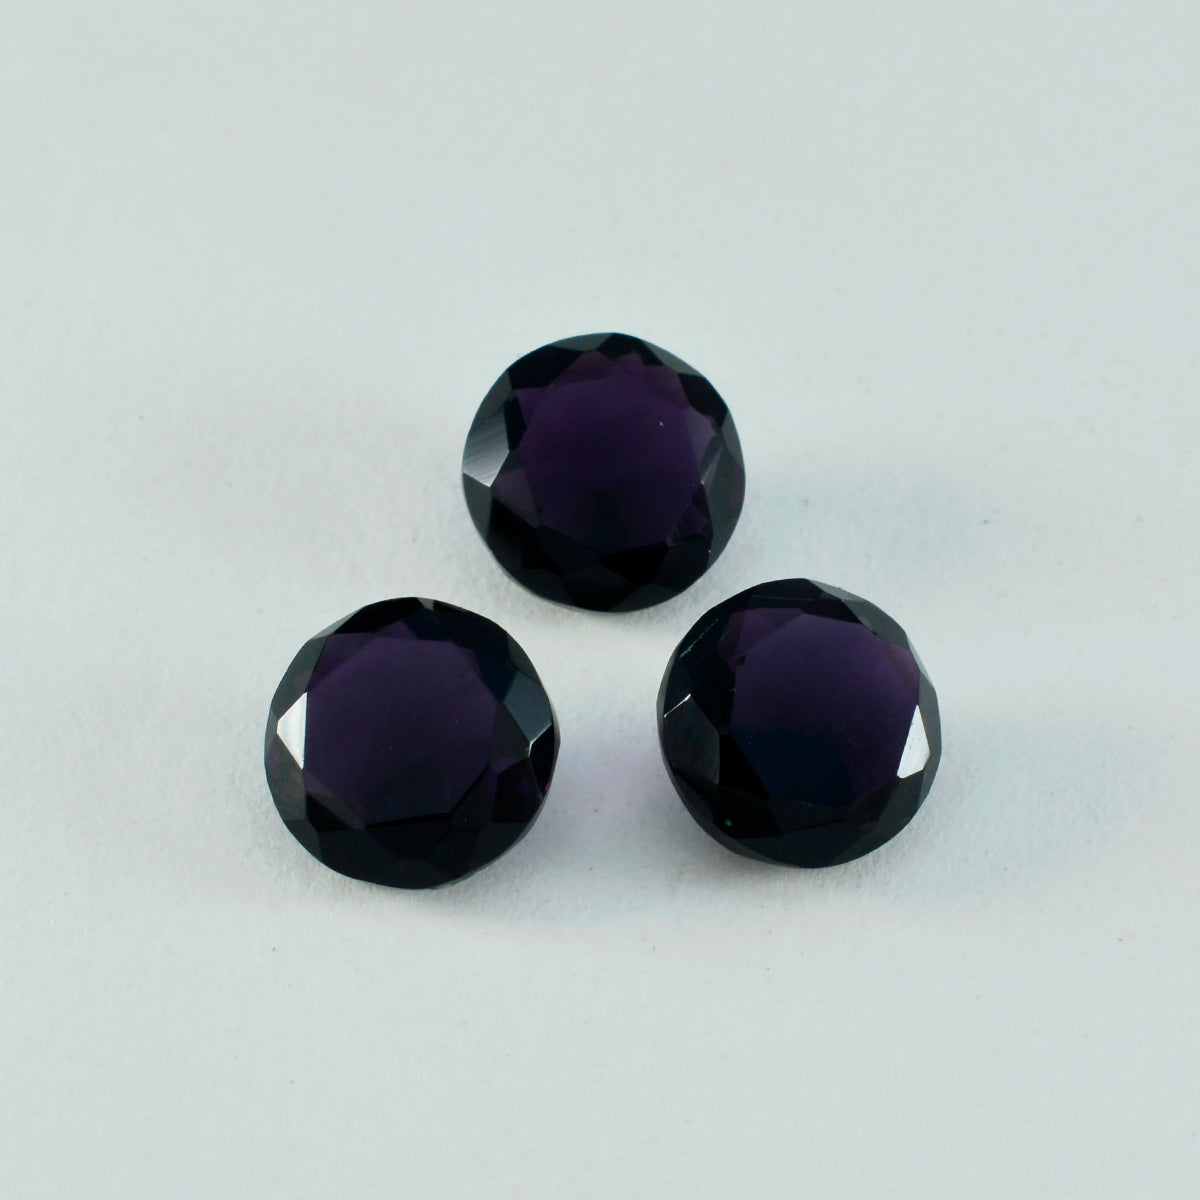 Riyogems 1PC Purple Amethyst CZ Faceted 15x15 mm Round Shape great Quality Loose Gems